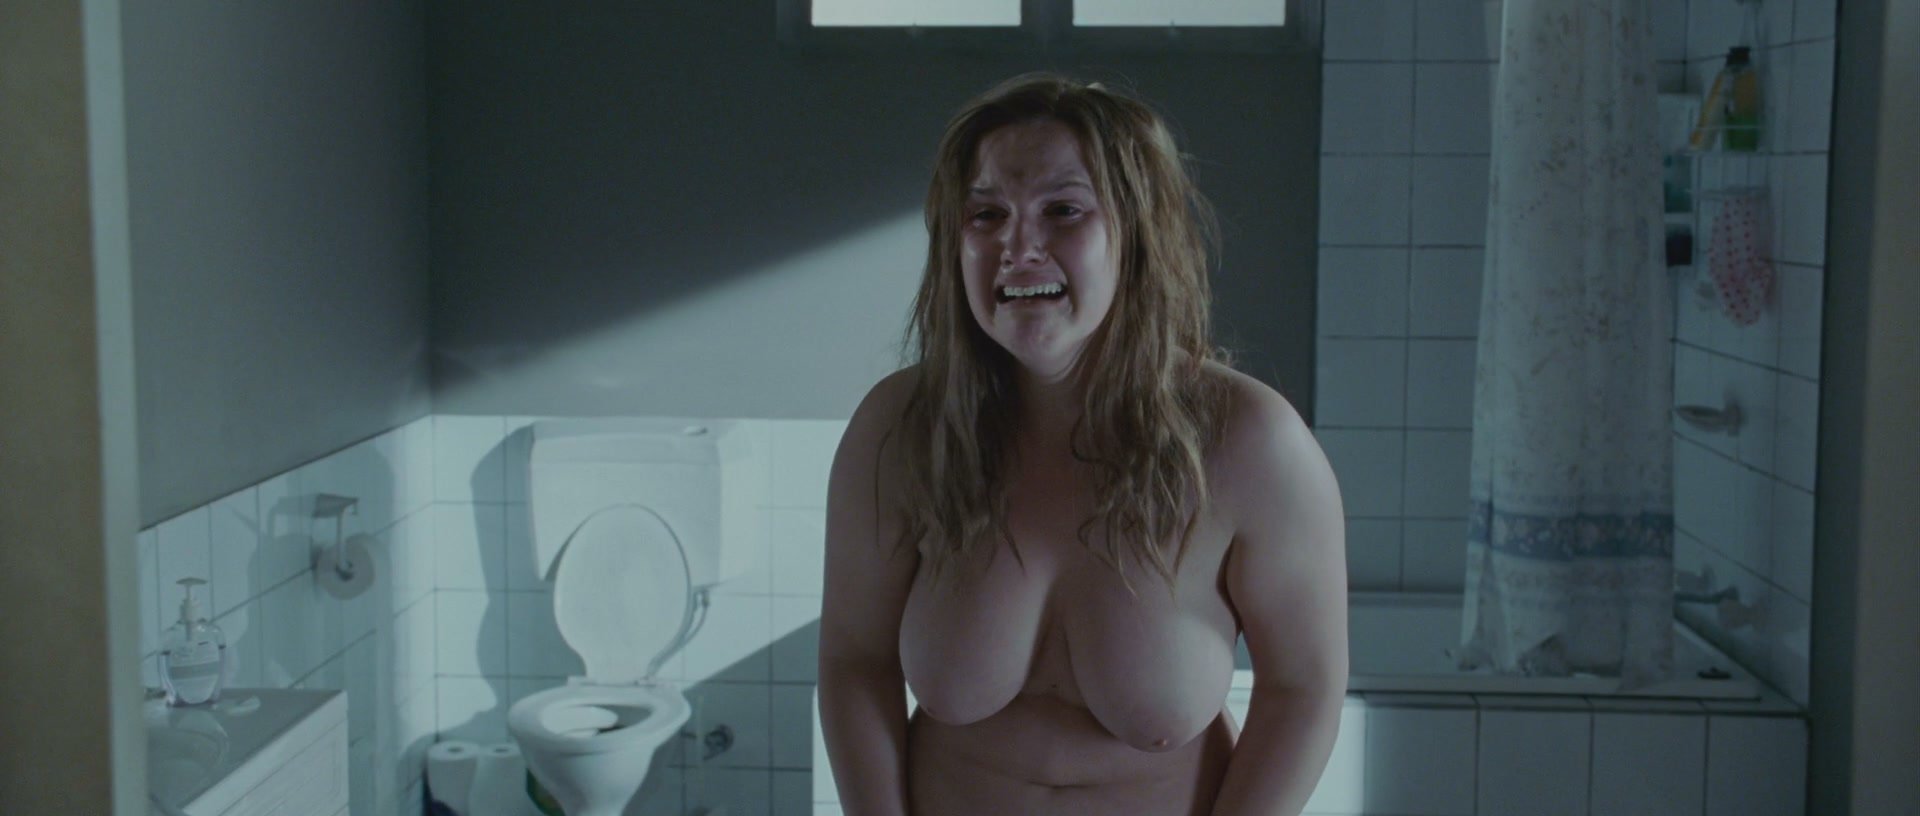 Ruth bradley topless